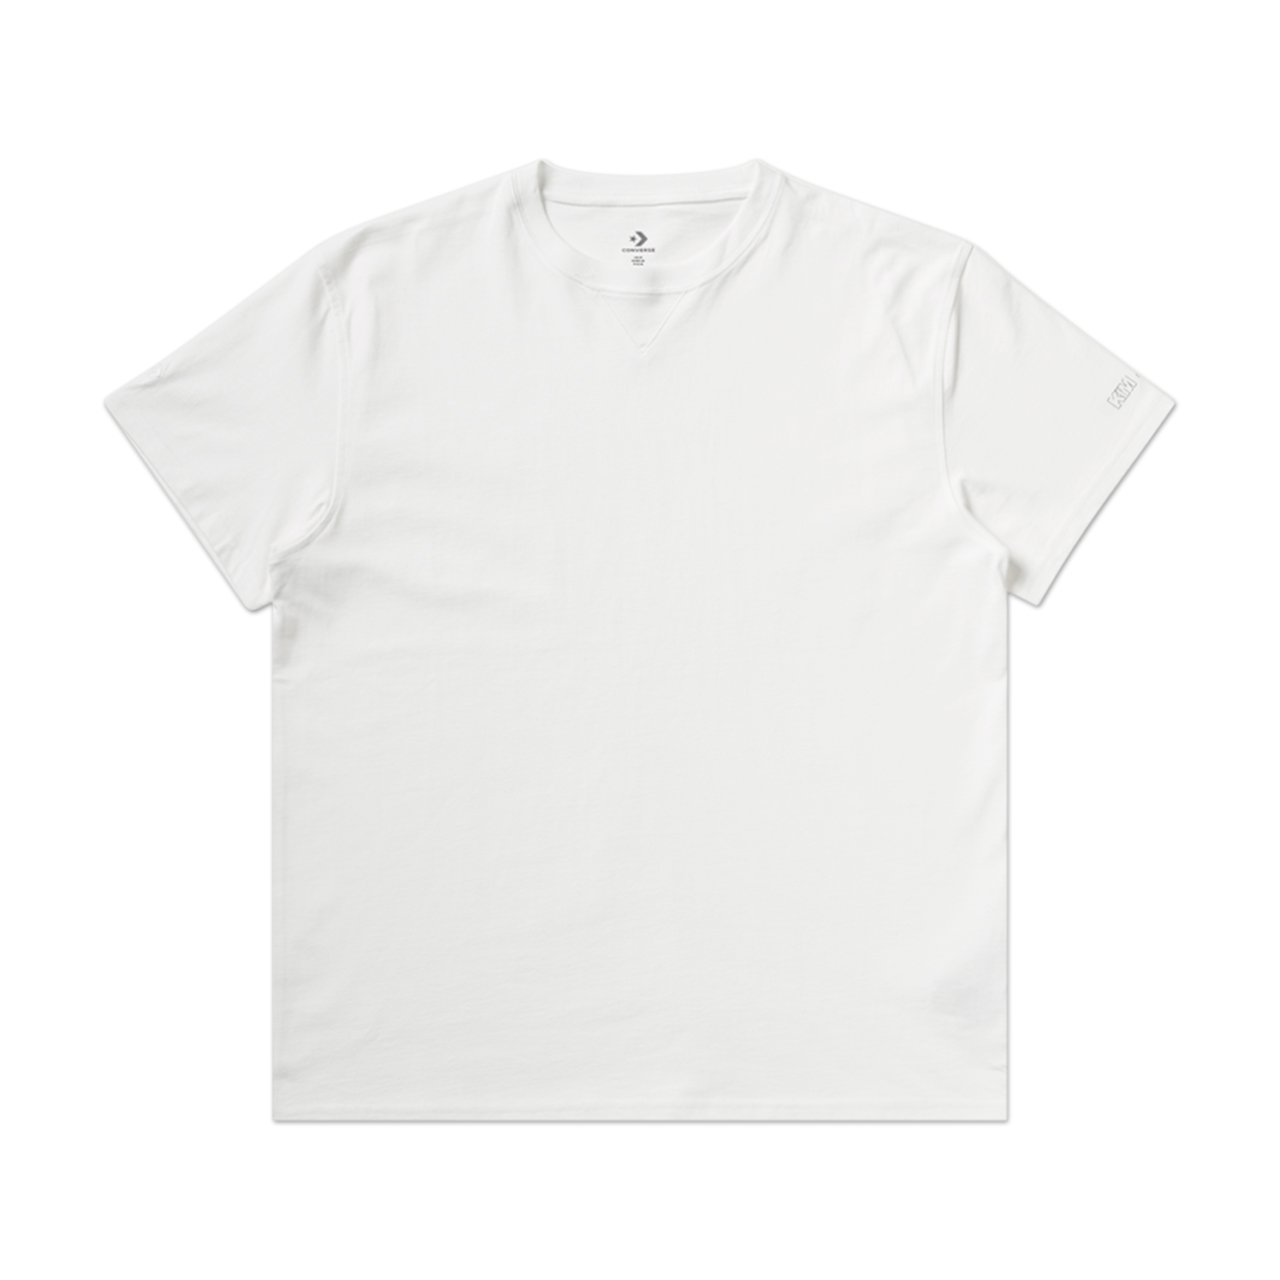 converse converse x kim jones t-shirt (white)